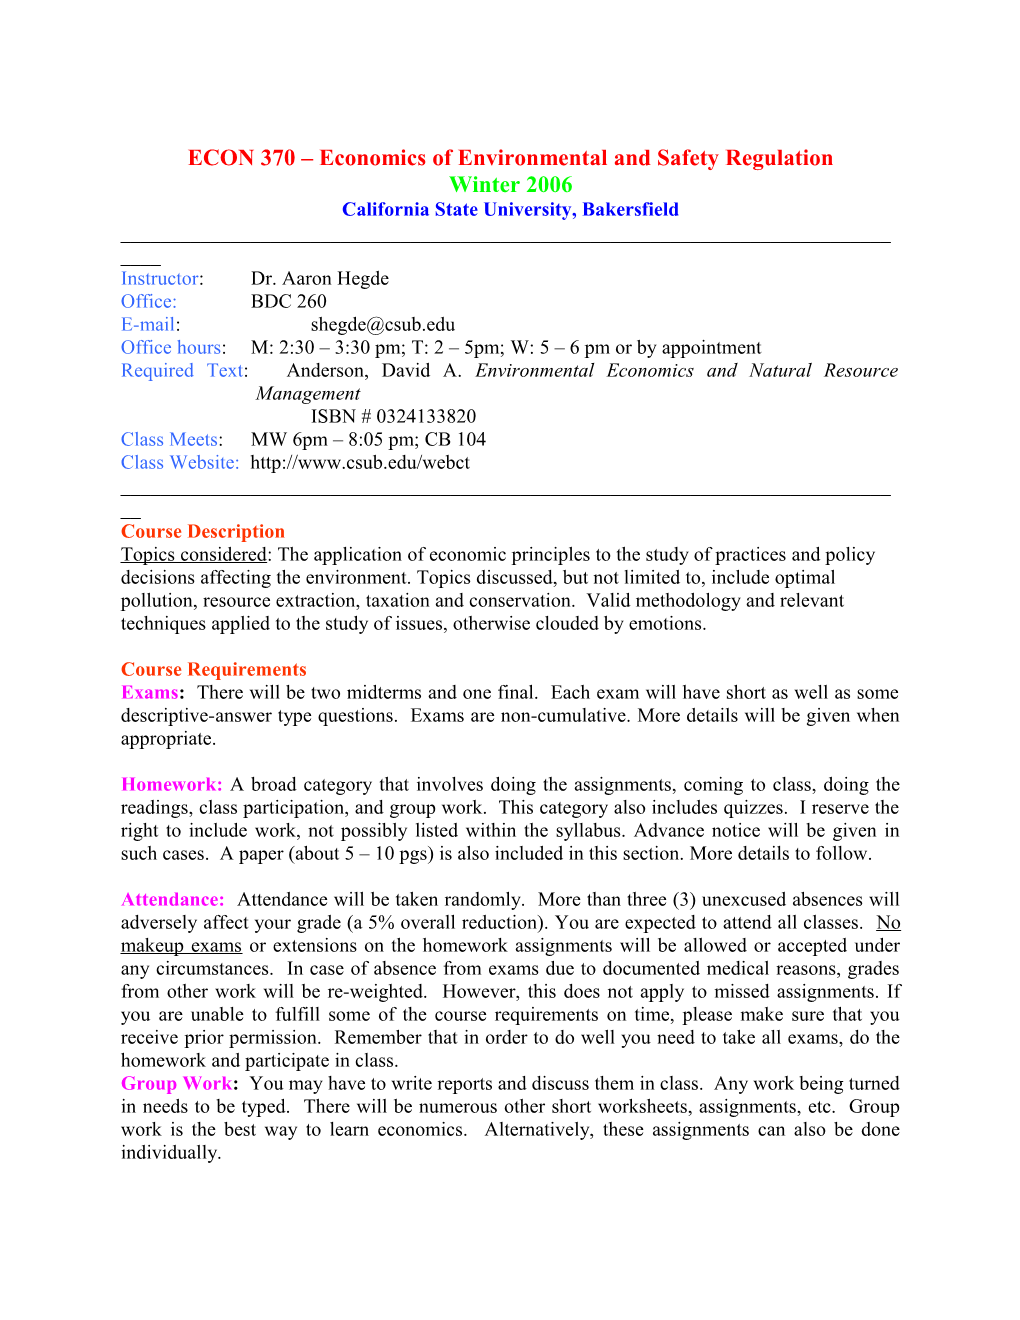 ECON 370 Economics of Environmental and Safety Regulation